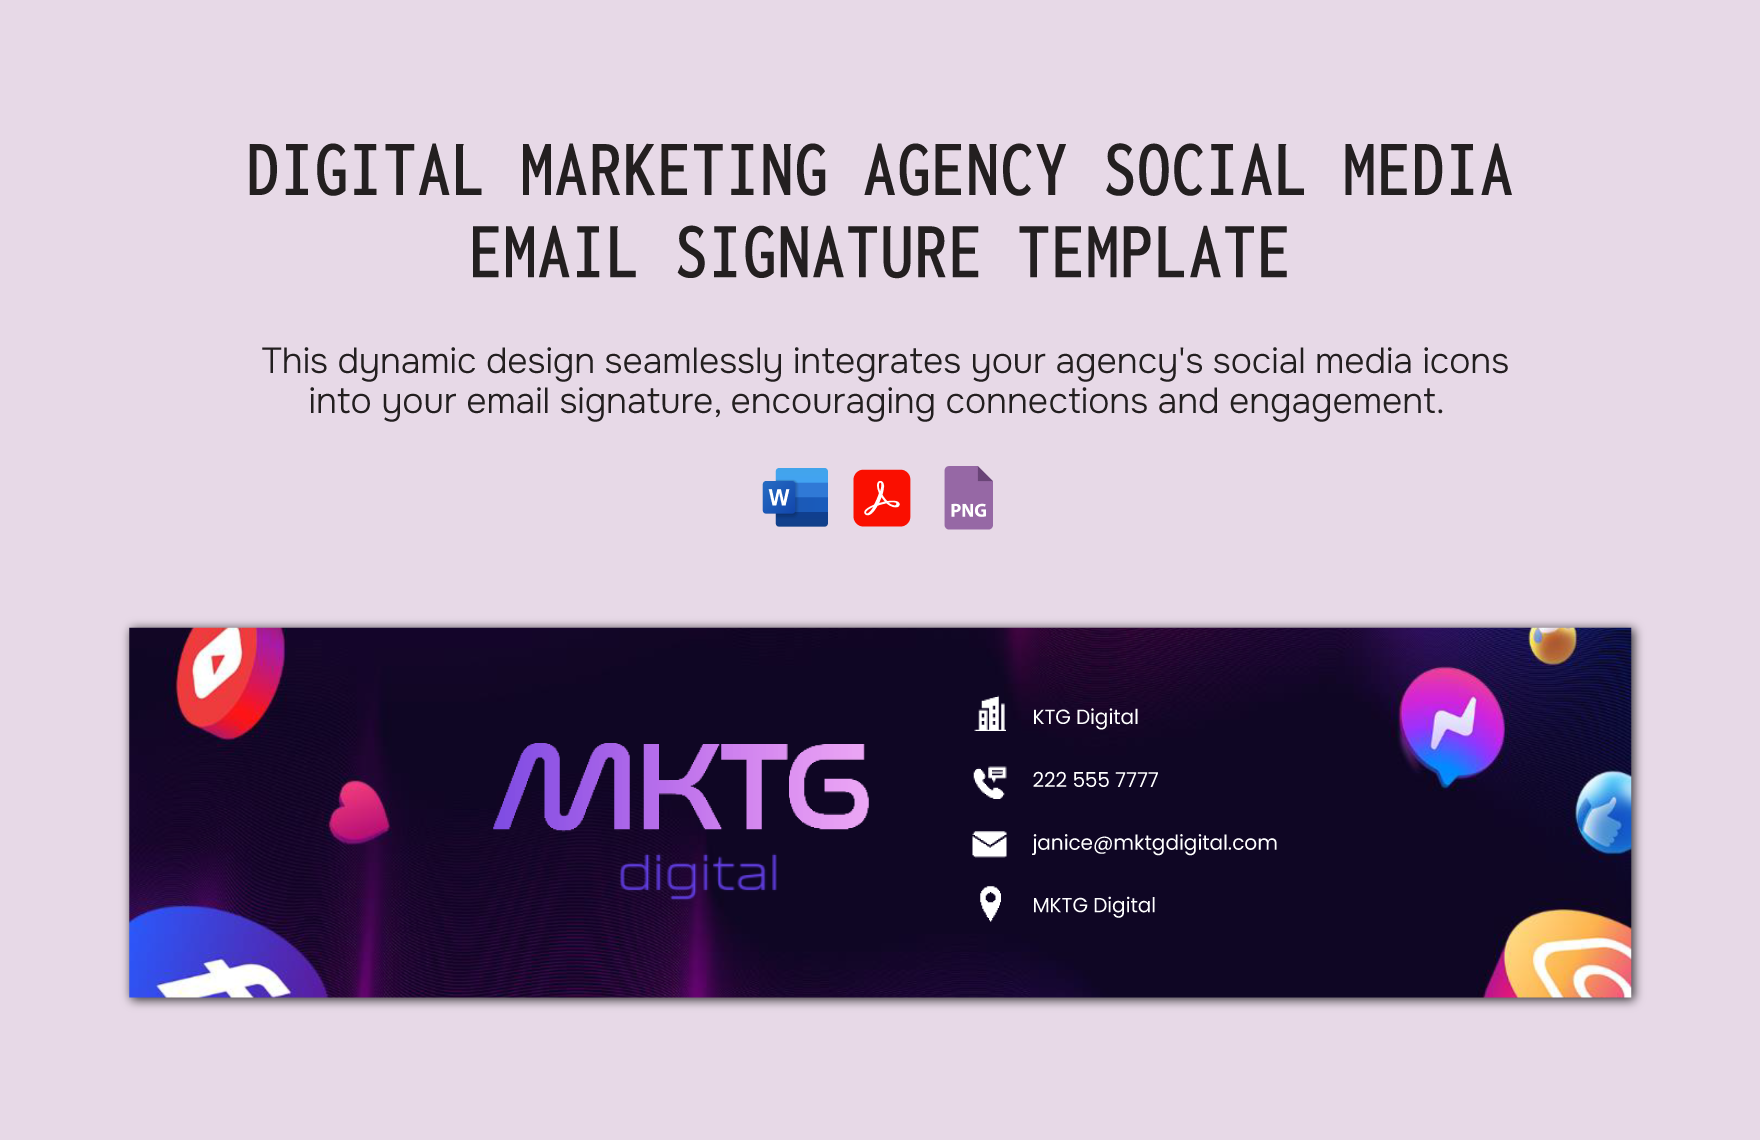 Digital Marketing Agency Social Media Email Signature Template